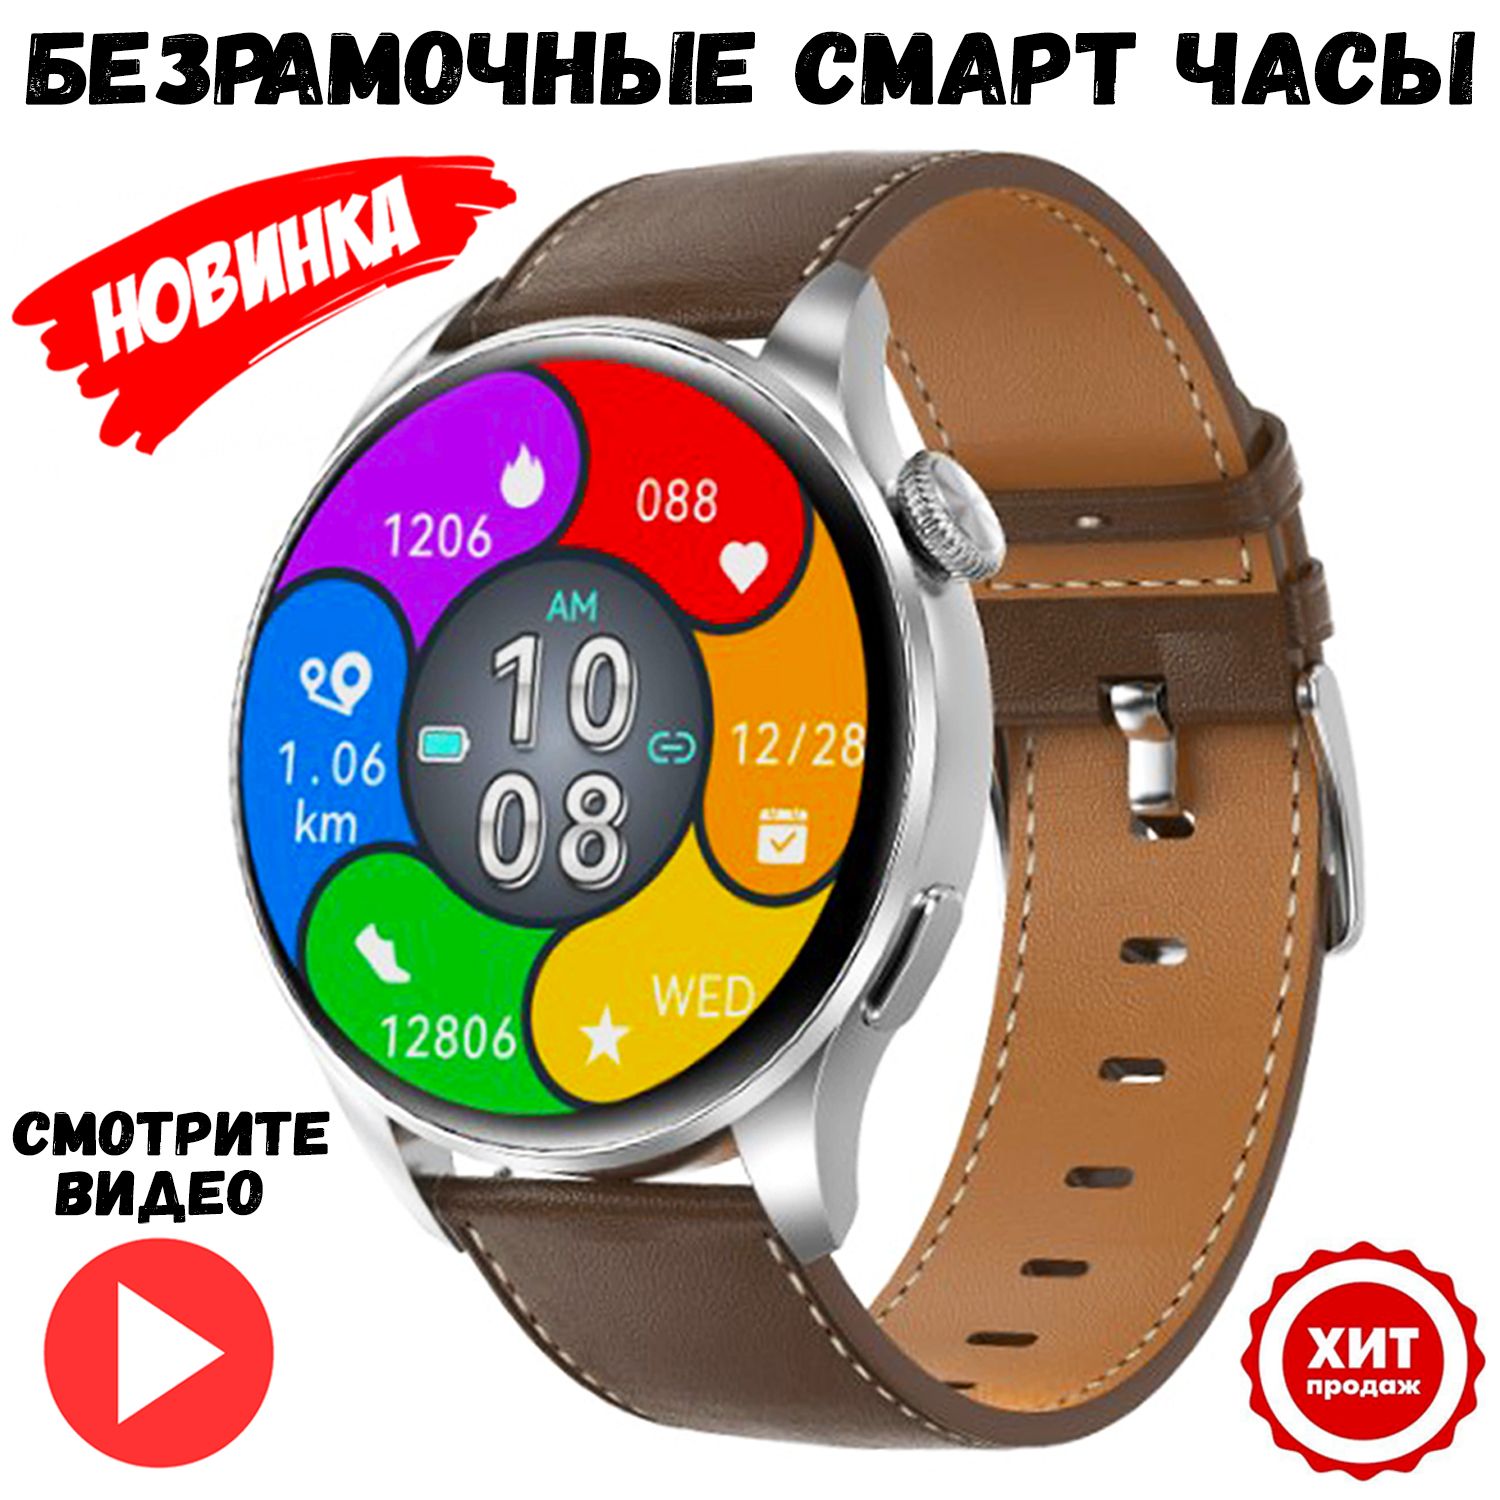 Смарт часы dt 3. Смарт часы watch 8 т900 Pro Max s заставки. Смарт часы watch 8 т900 Pro Max s варианты циферблата. Смарт часы watch 8 т900 Pro Max s черные.